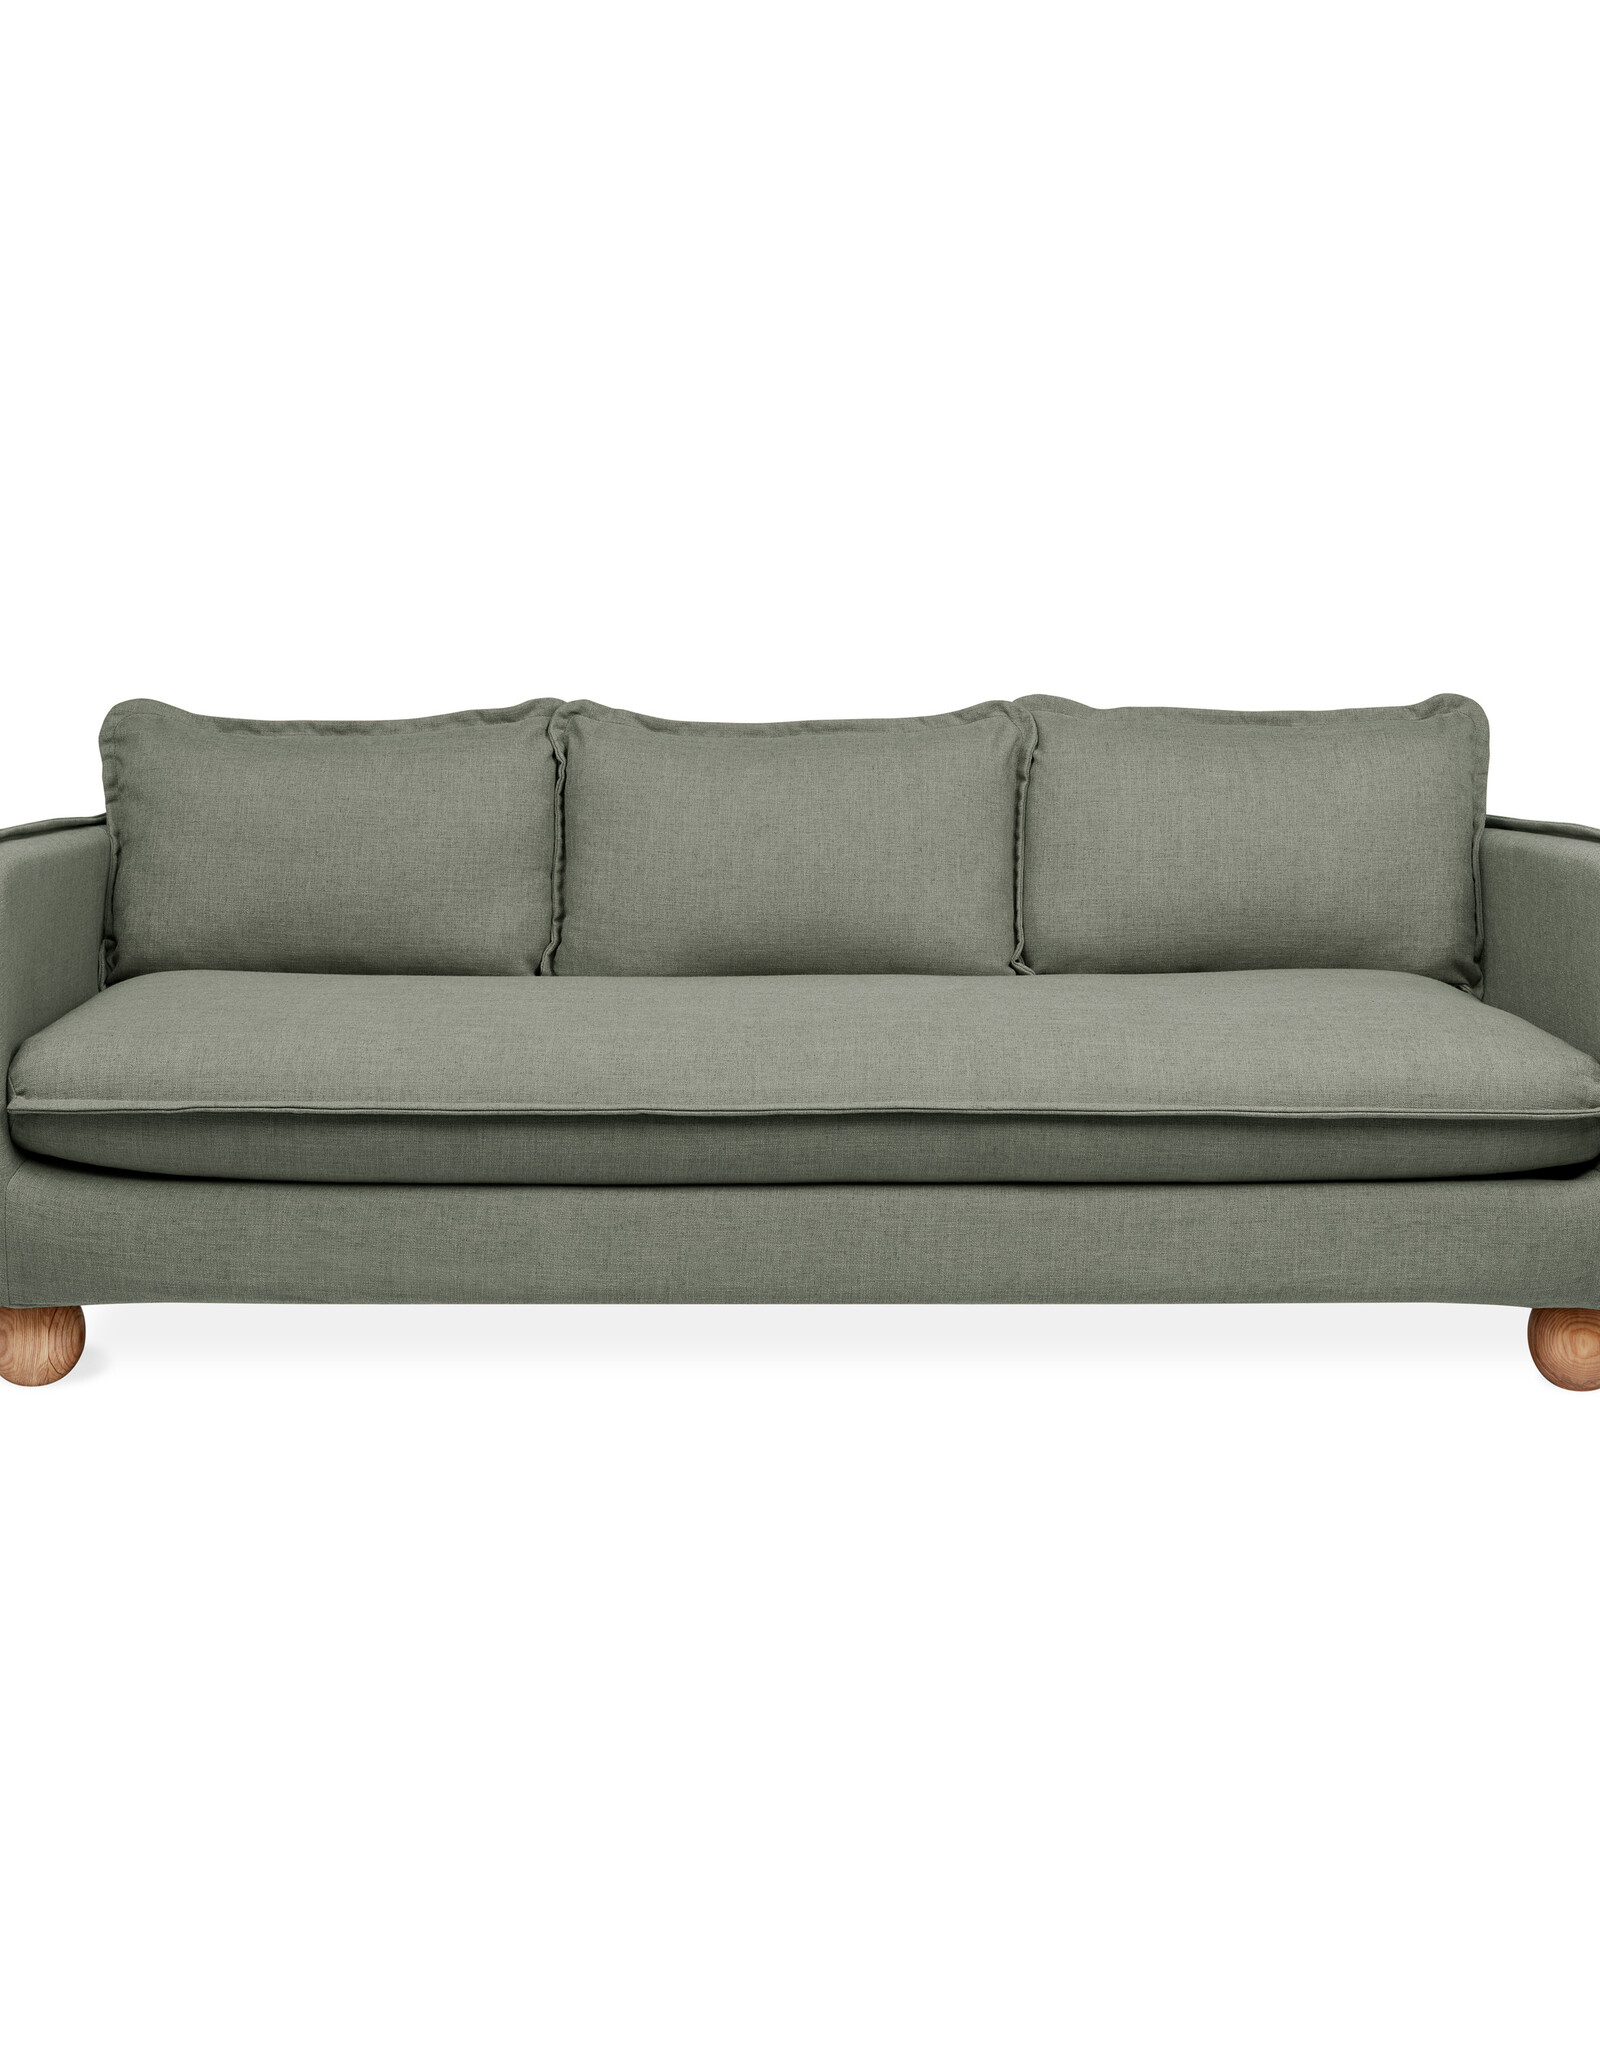 Gus* Modern Monterey Sofa